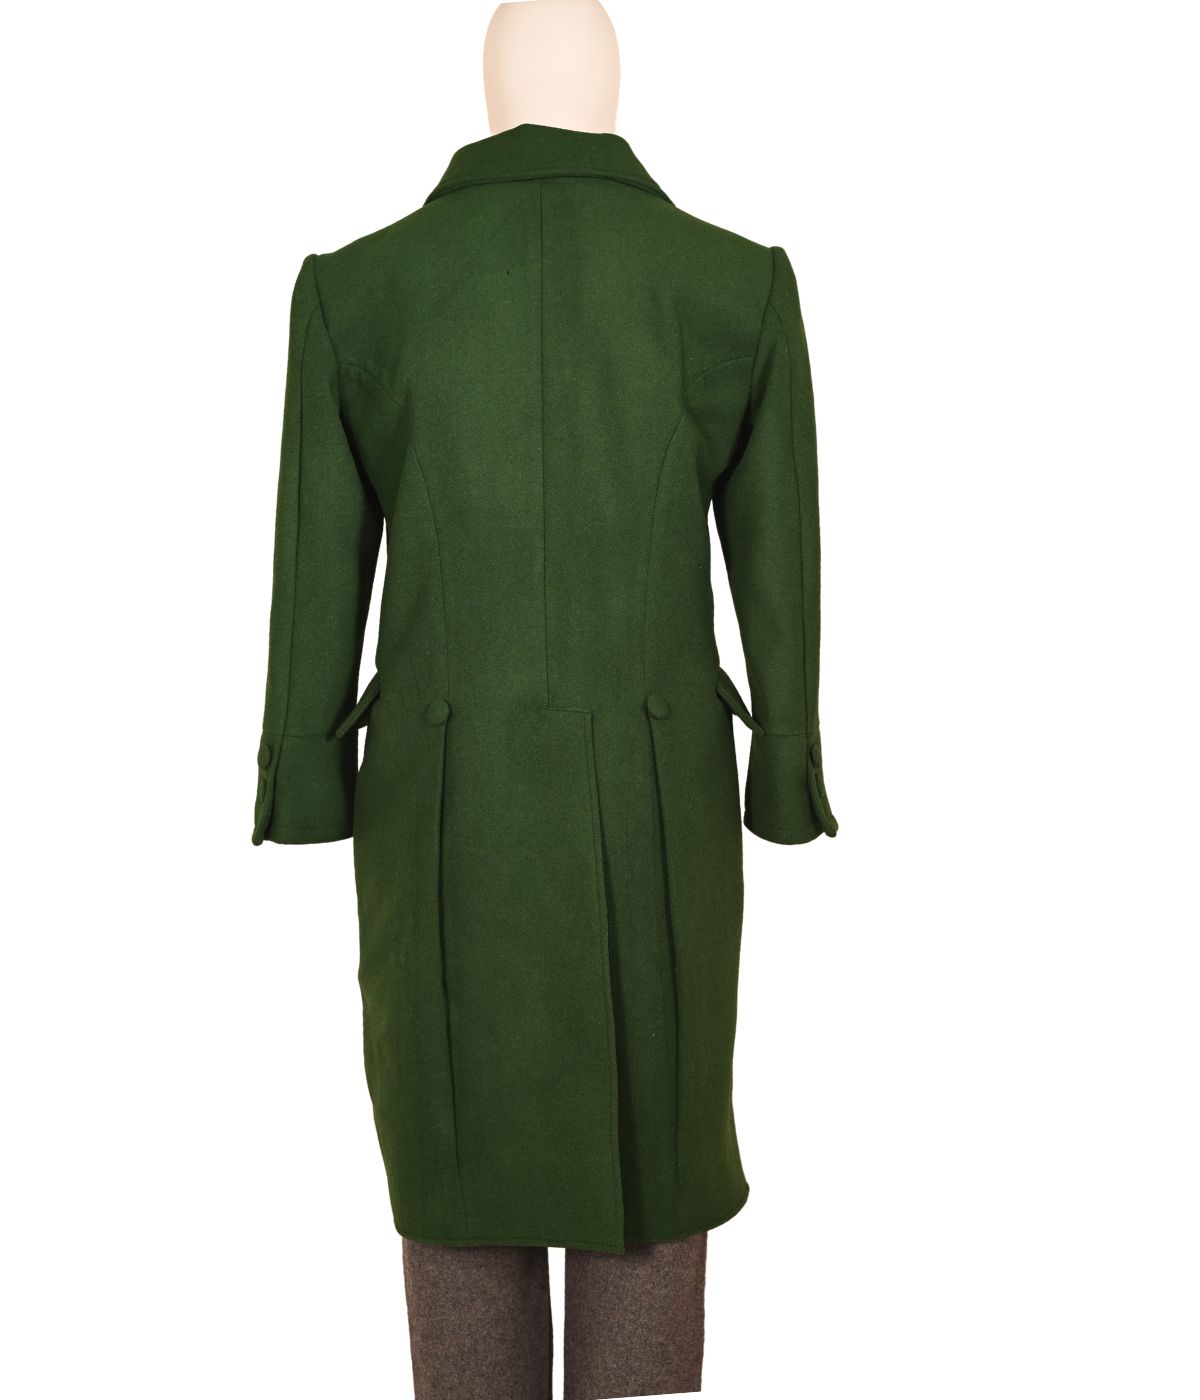 19th century Men's Green Wool Military Regency Tailcoat